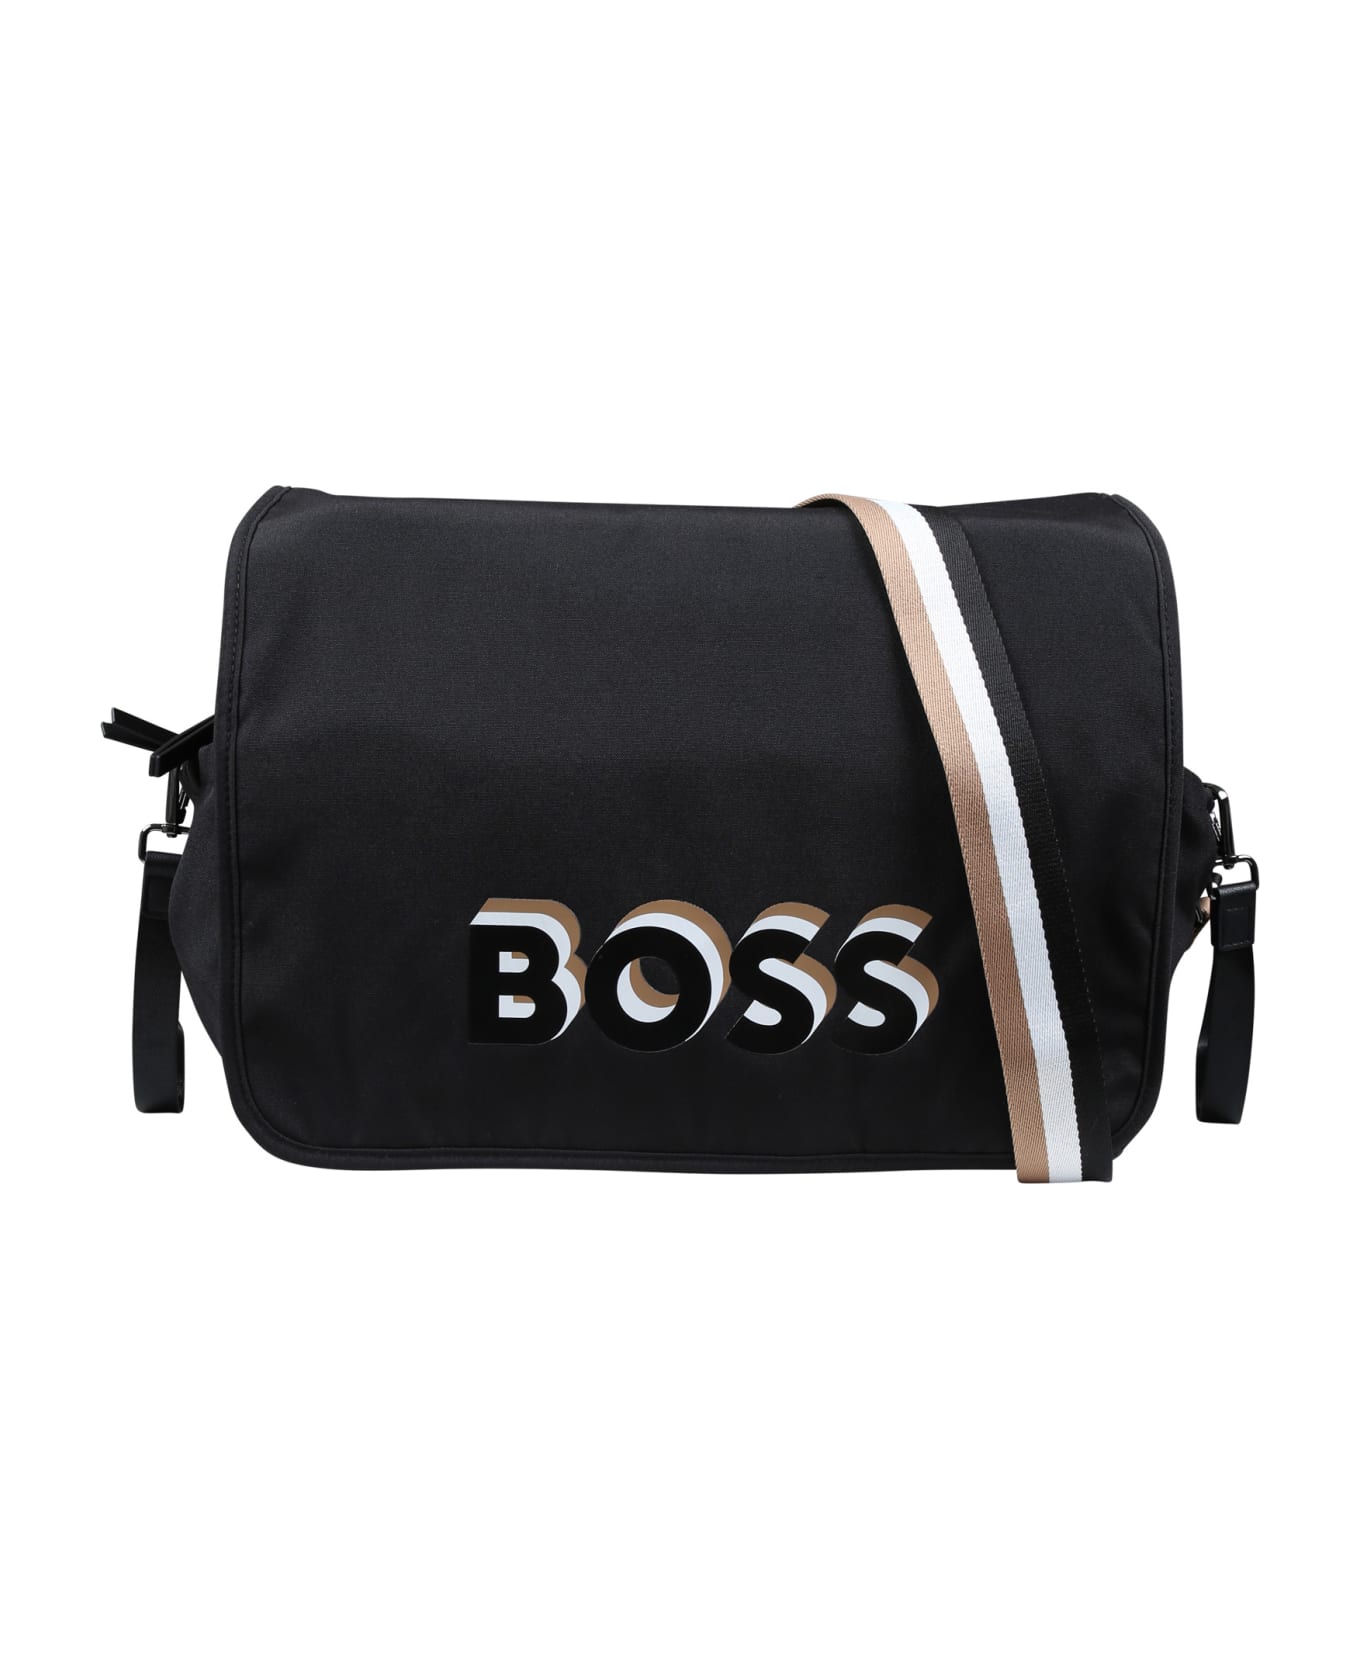 Hugo Boss Black Mother Bag For Baby Boy With Logo - Nero